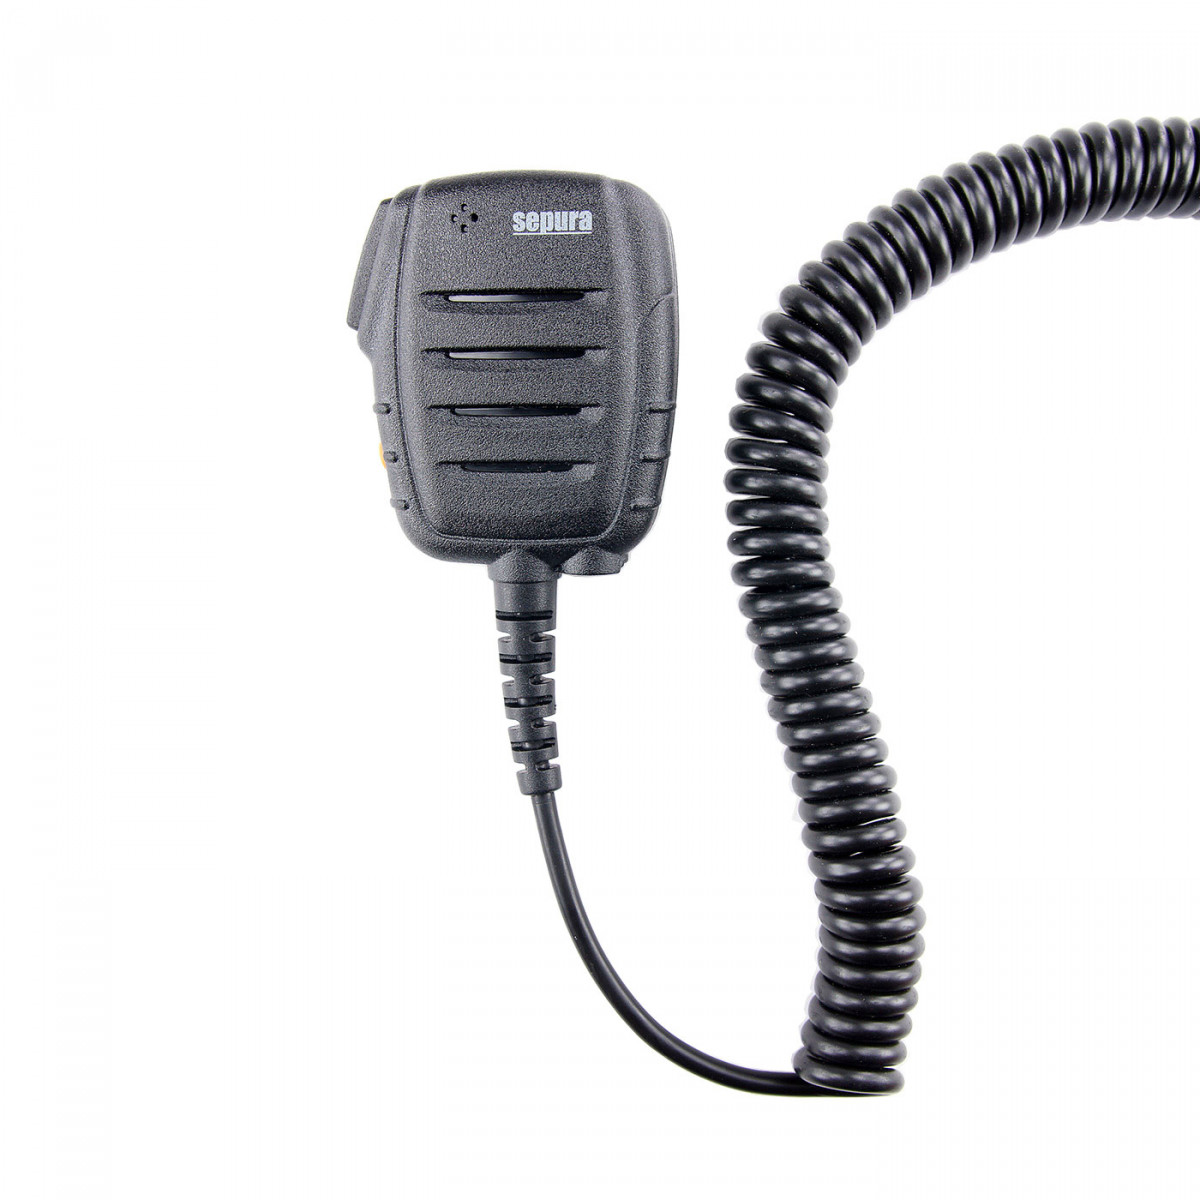 SEPURA Lautsprecher-Mikrofon für Kfz-Einbausatz für Sepura STP8/9000 300-00444